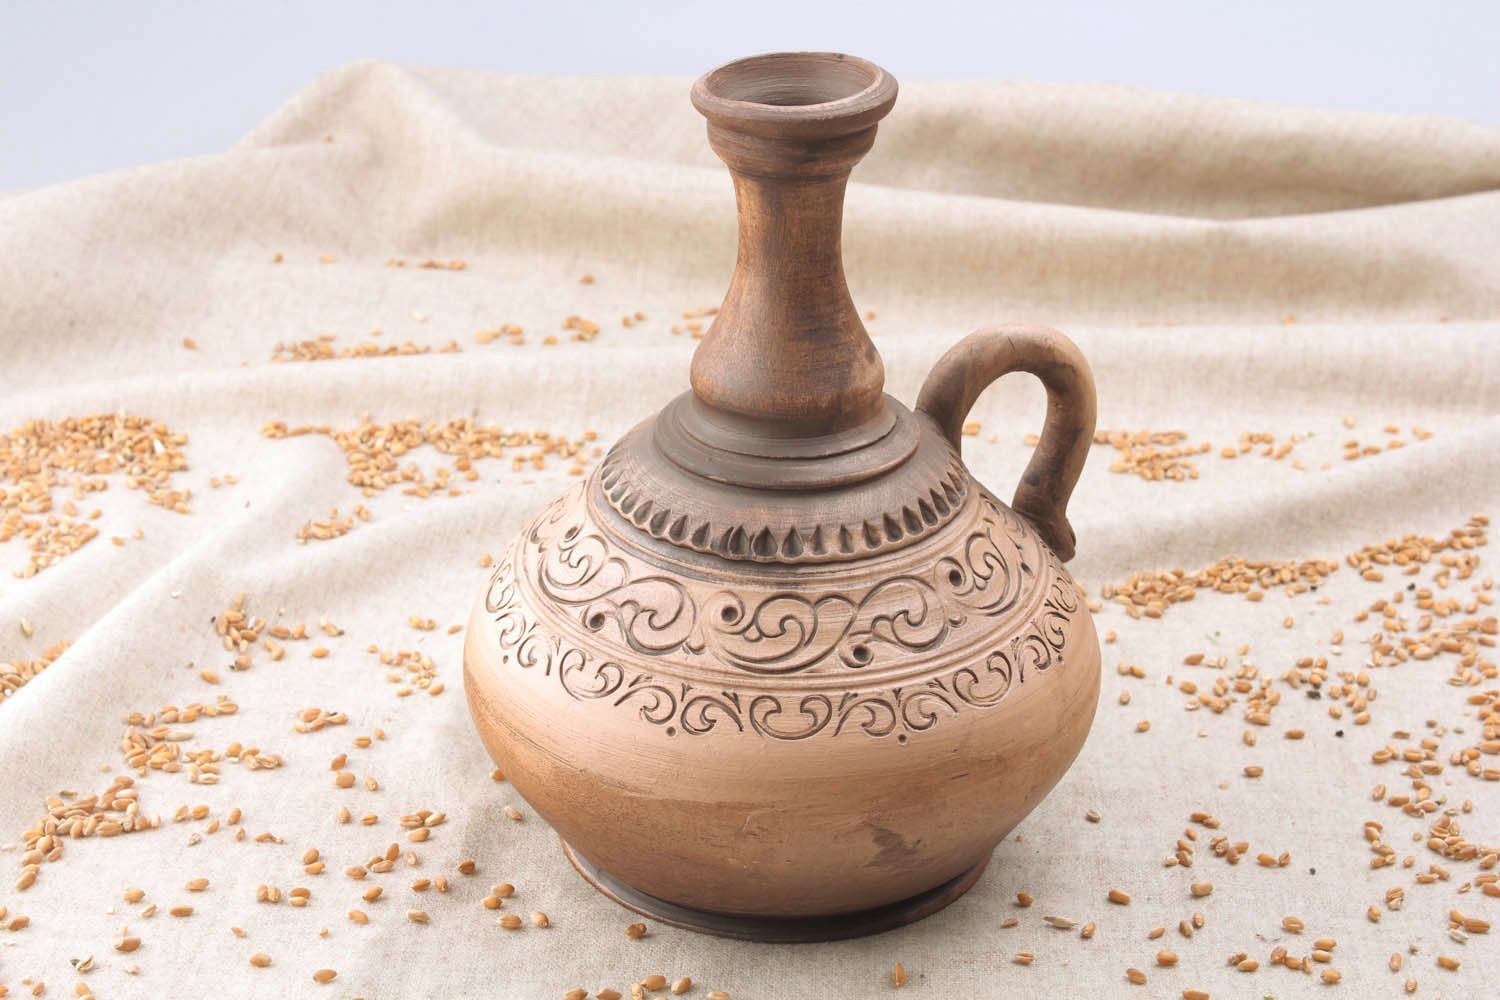 Ceramic wine jug with ornaments